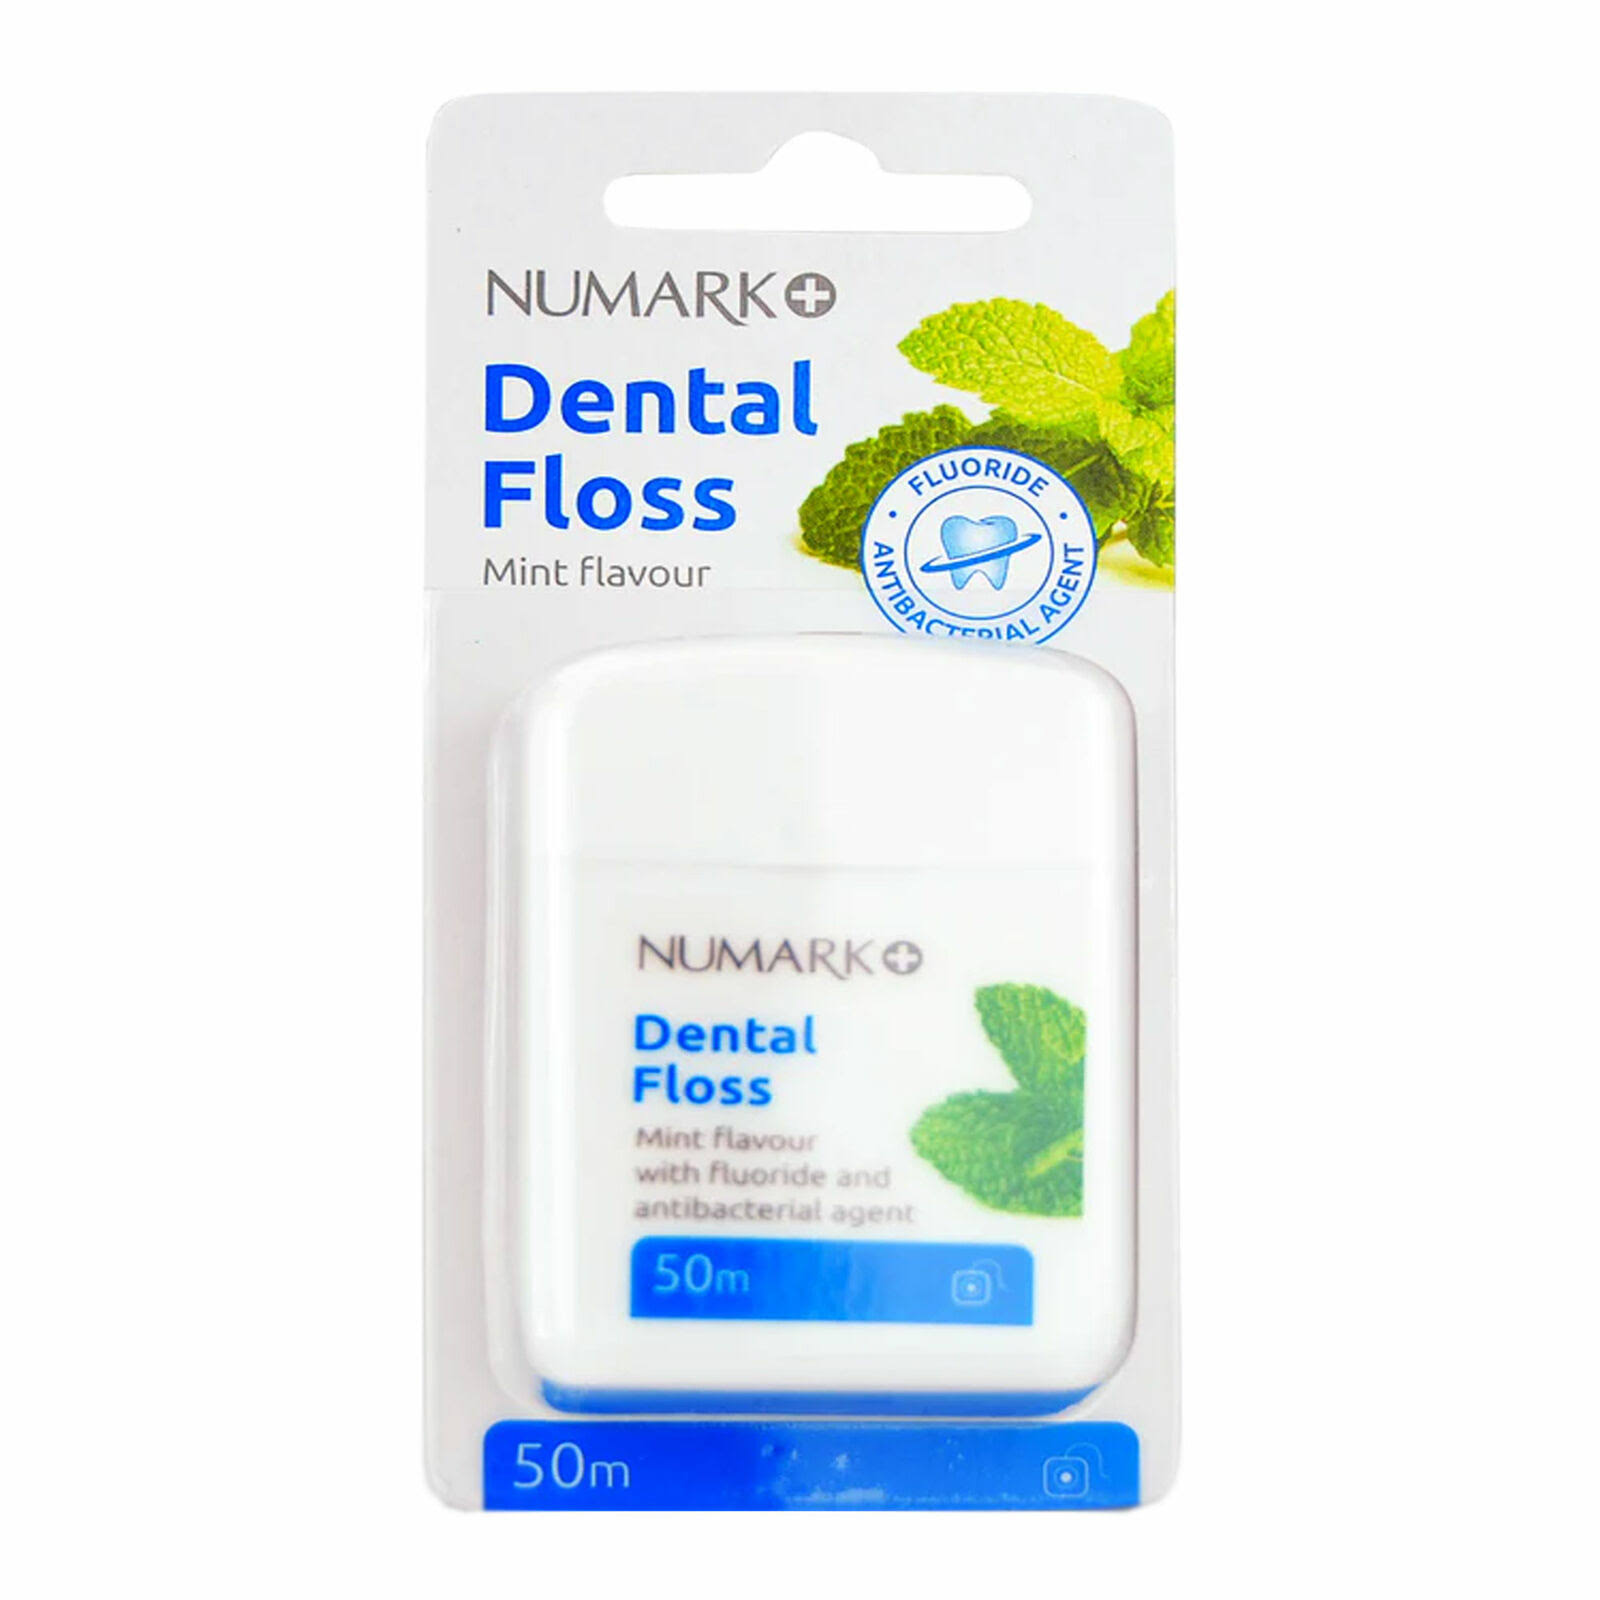 Numark Dental Floss - 50m